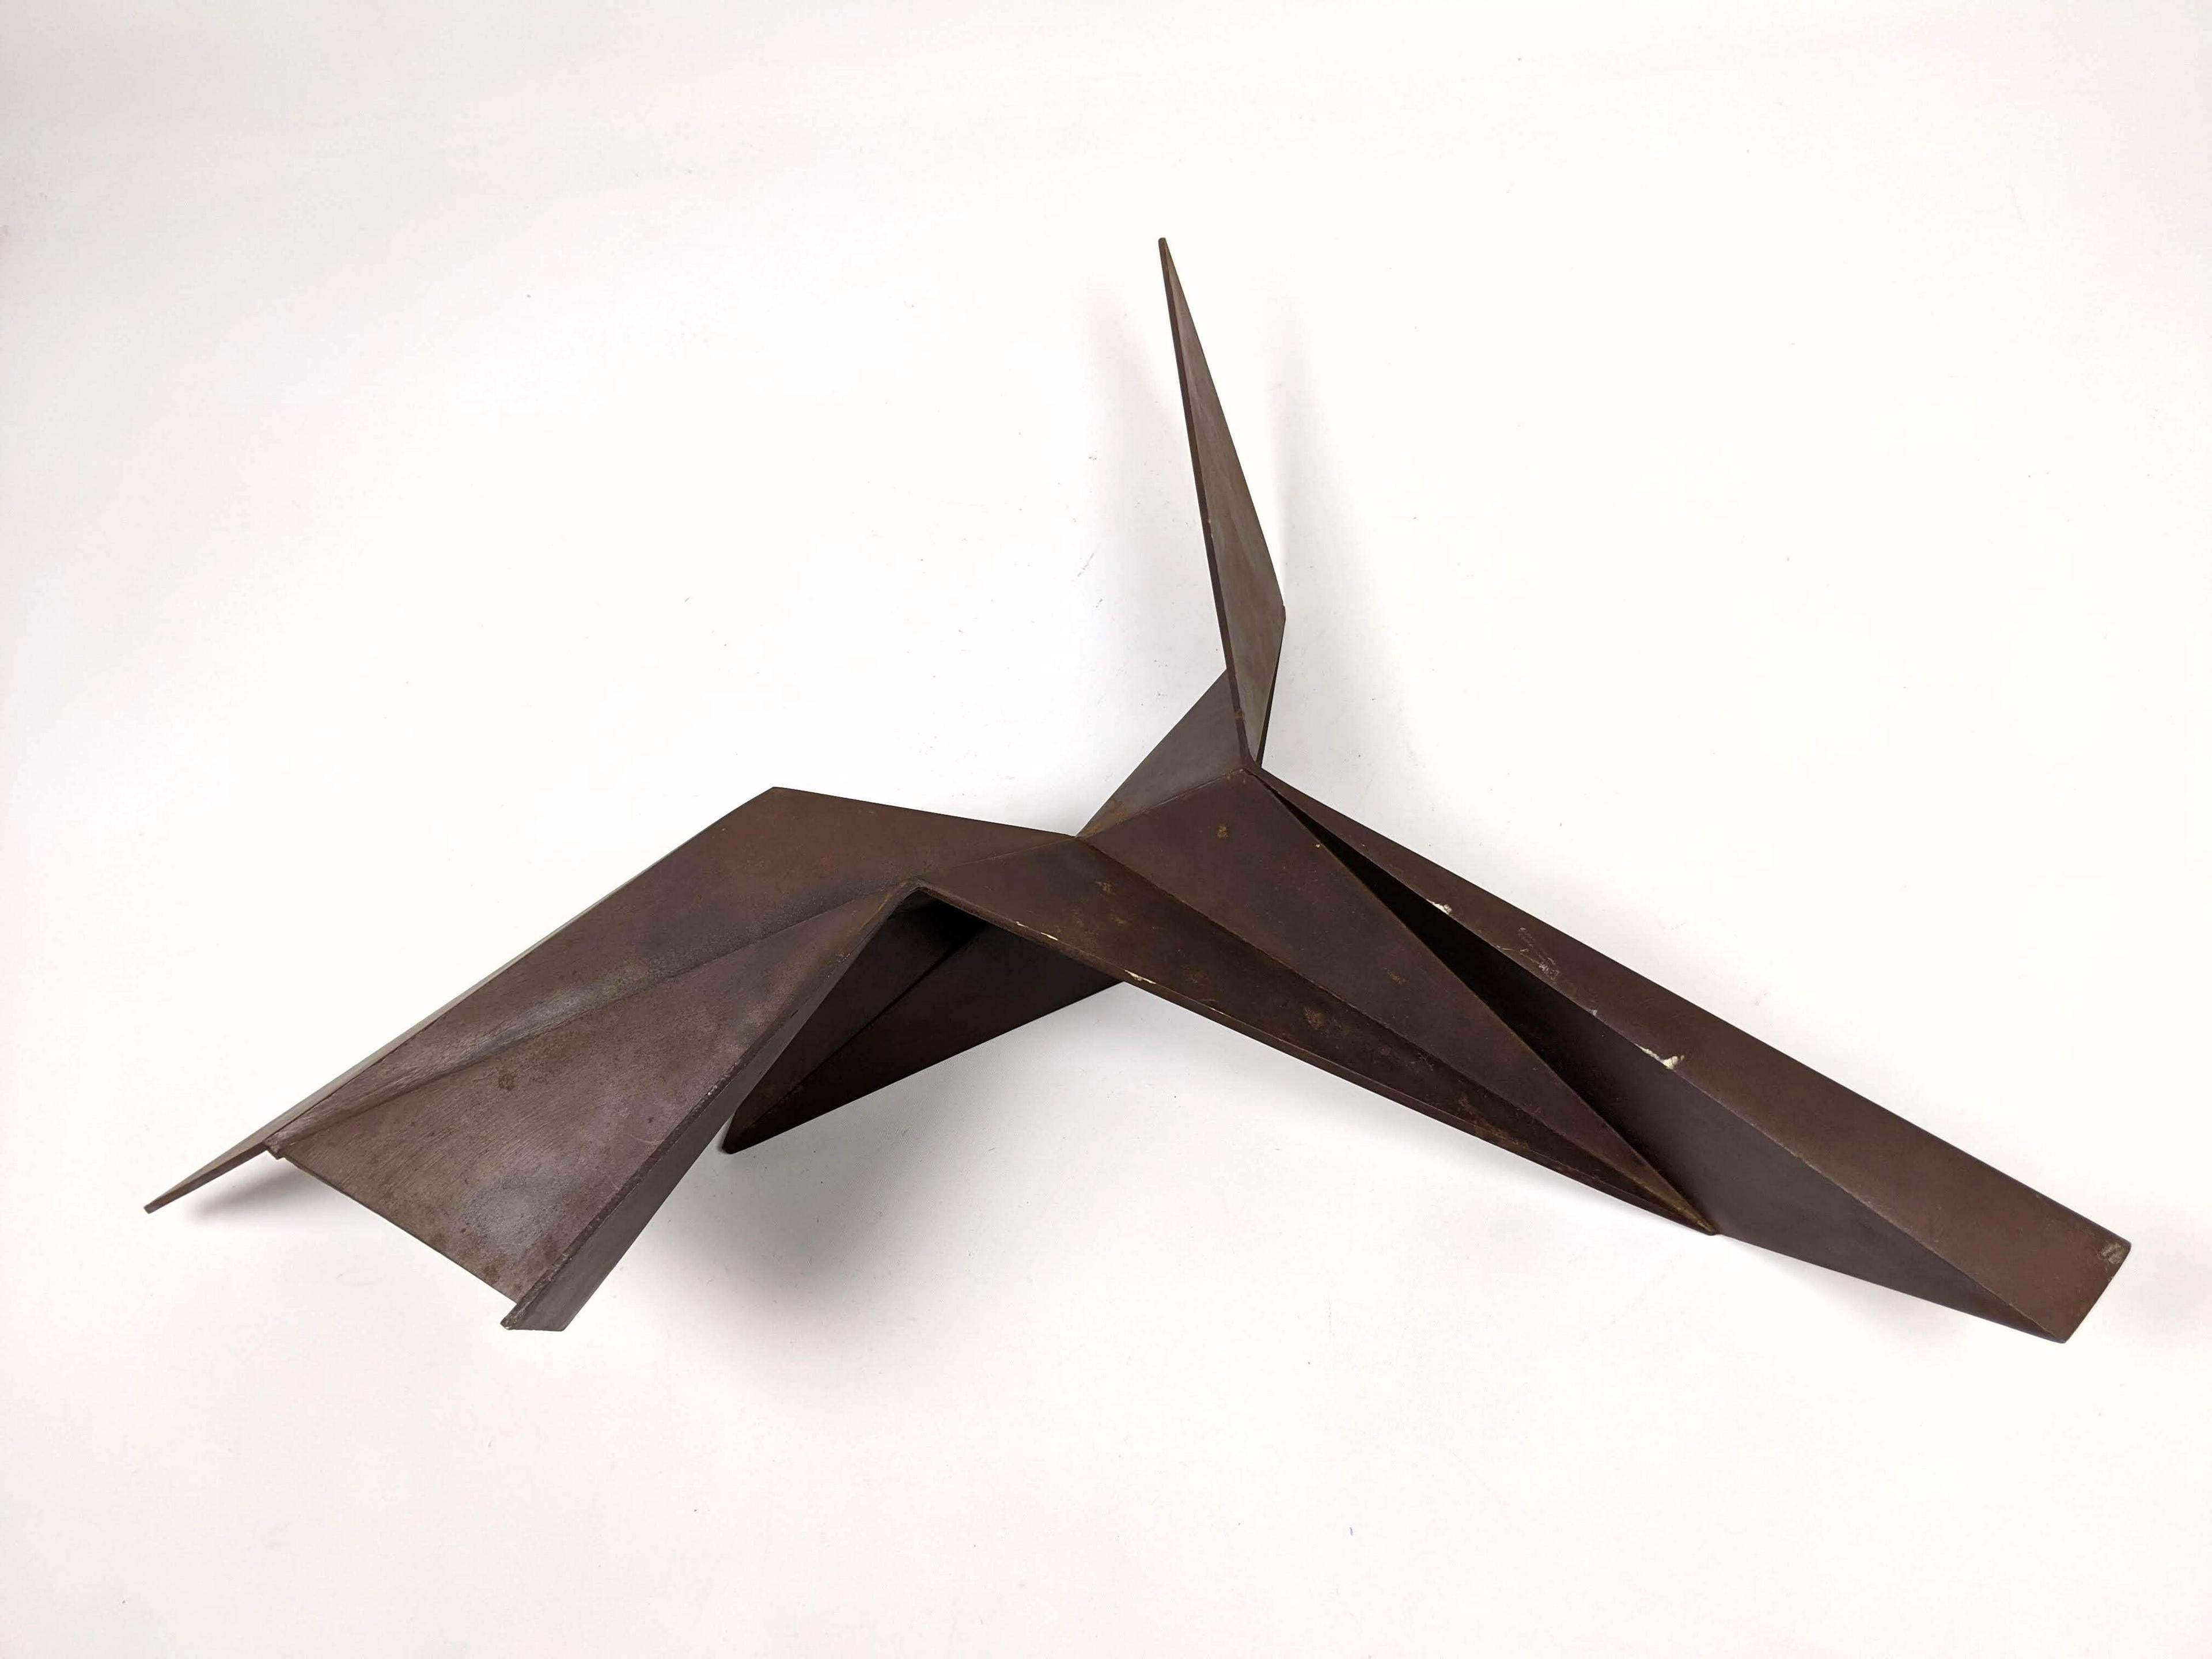 Corten Steel Abstract Geometric Folded Origami Sculpture Gerald DiGiusto  2